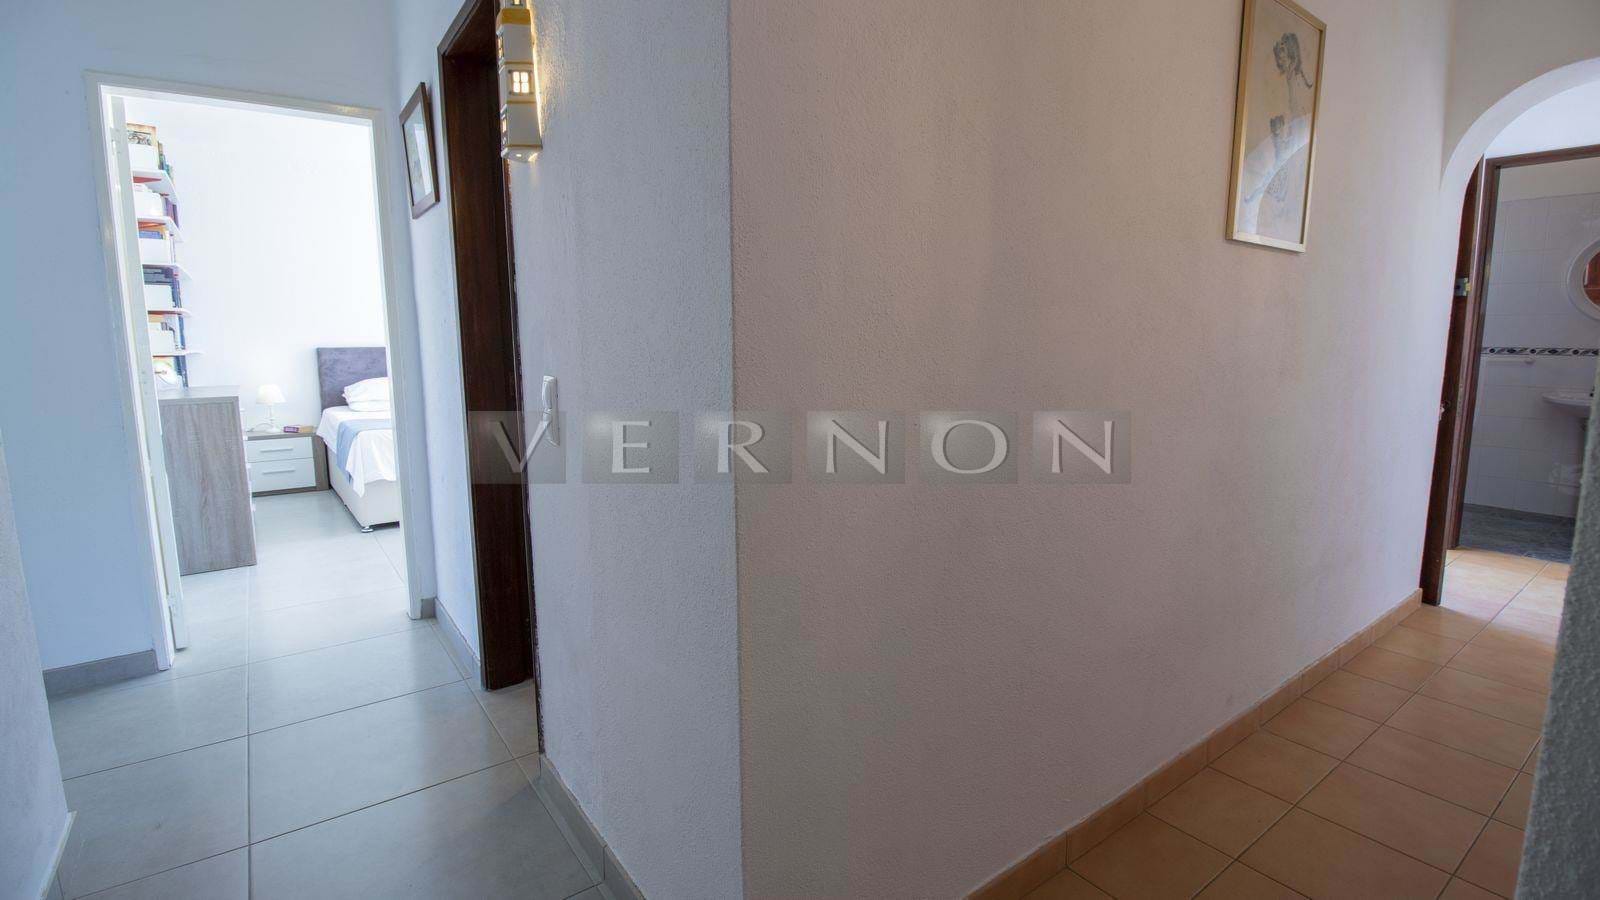 Vernon Real Estate